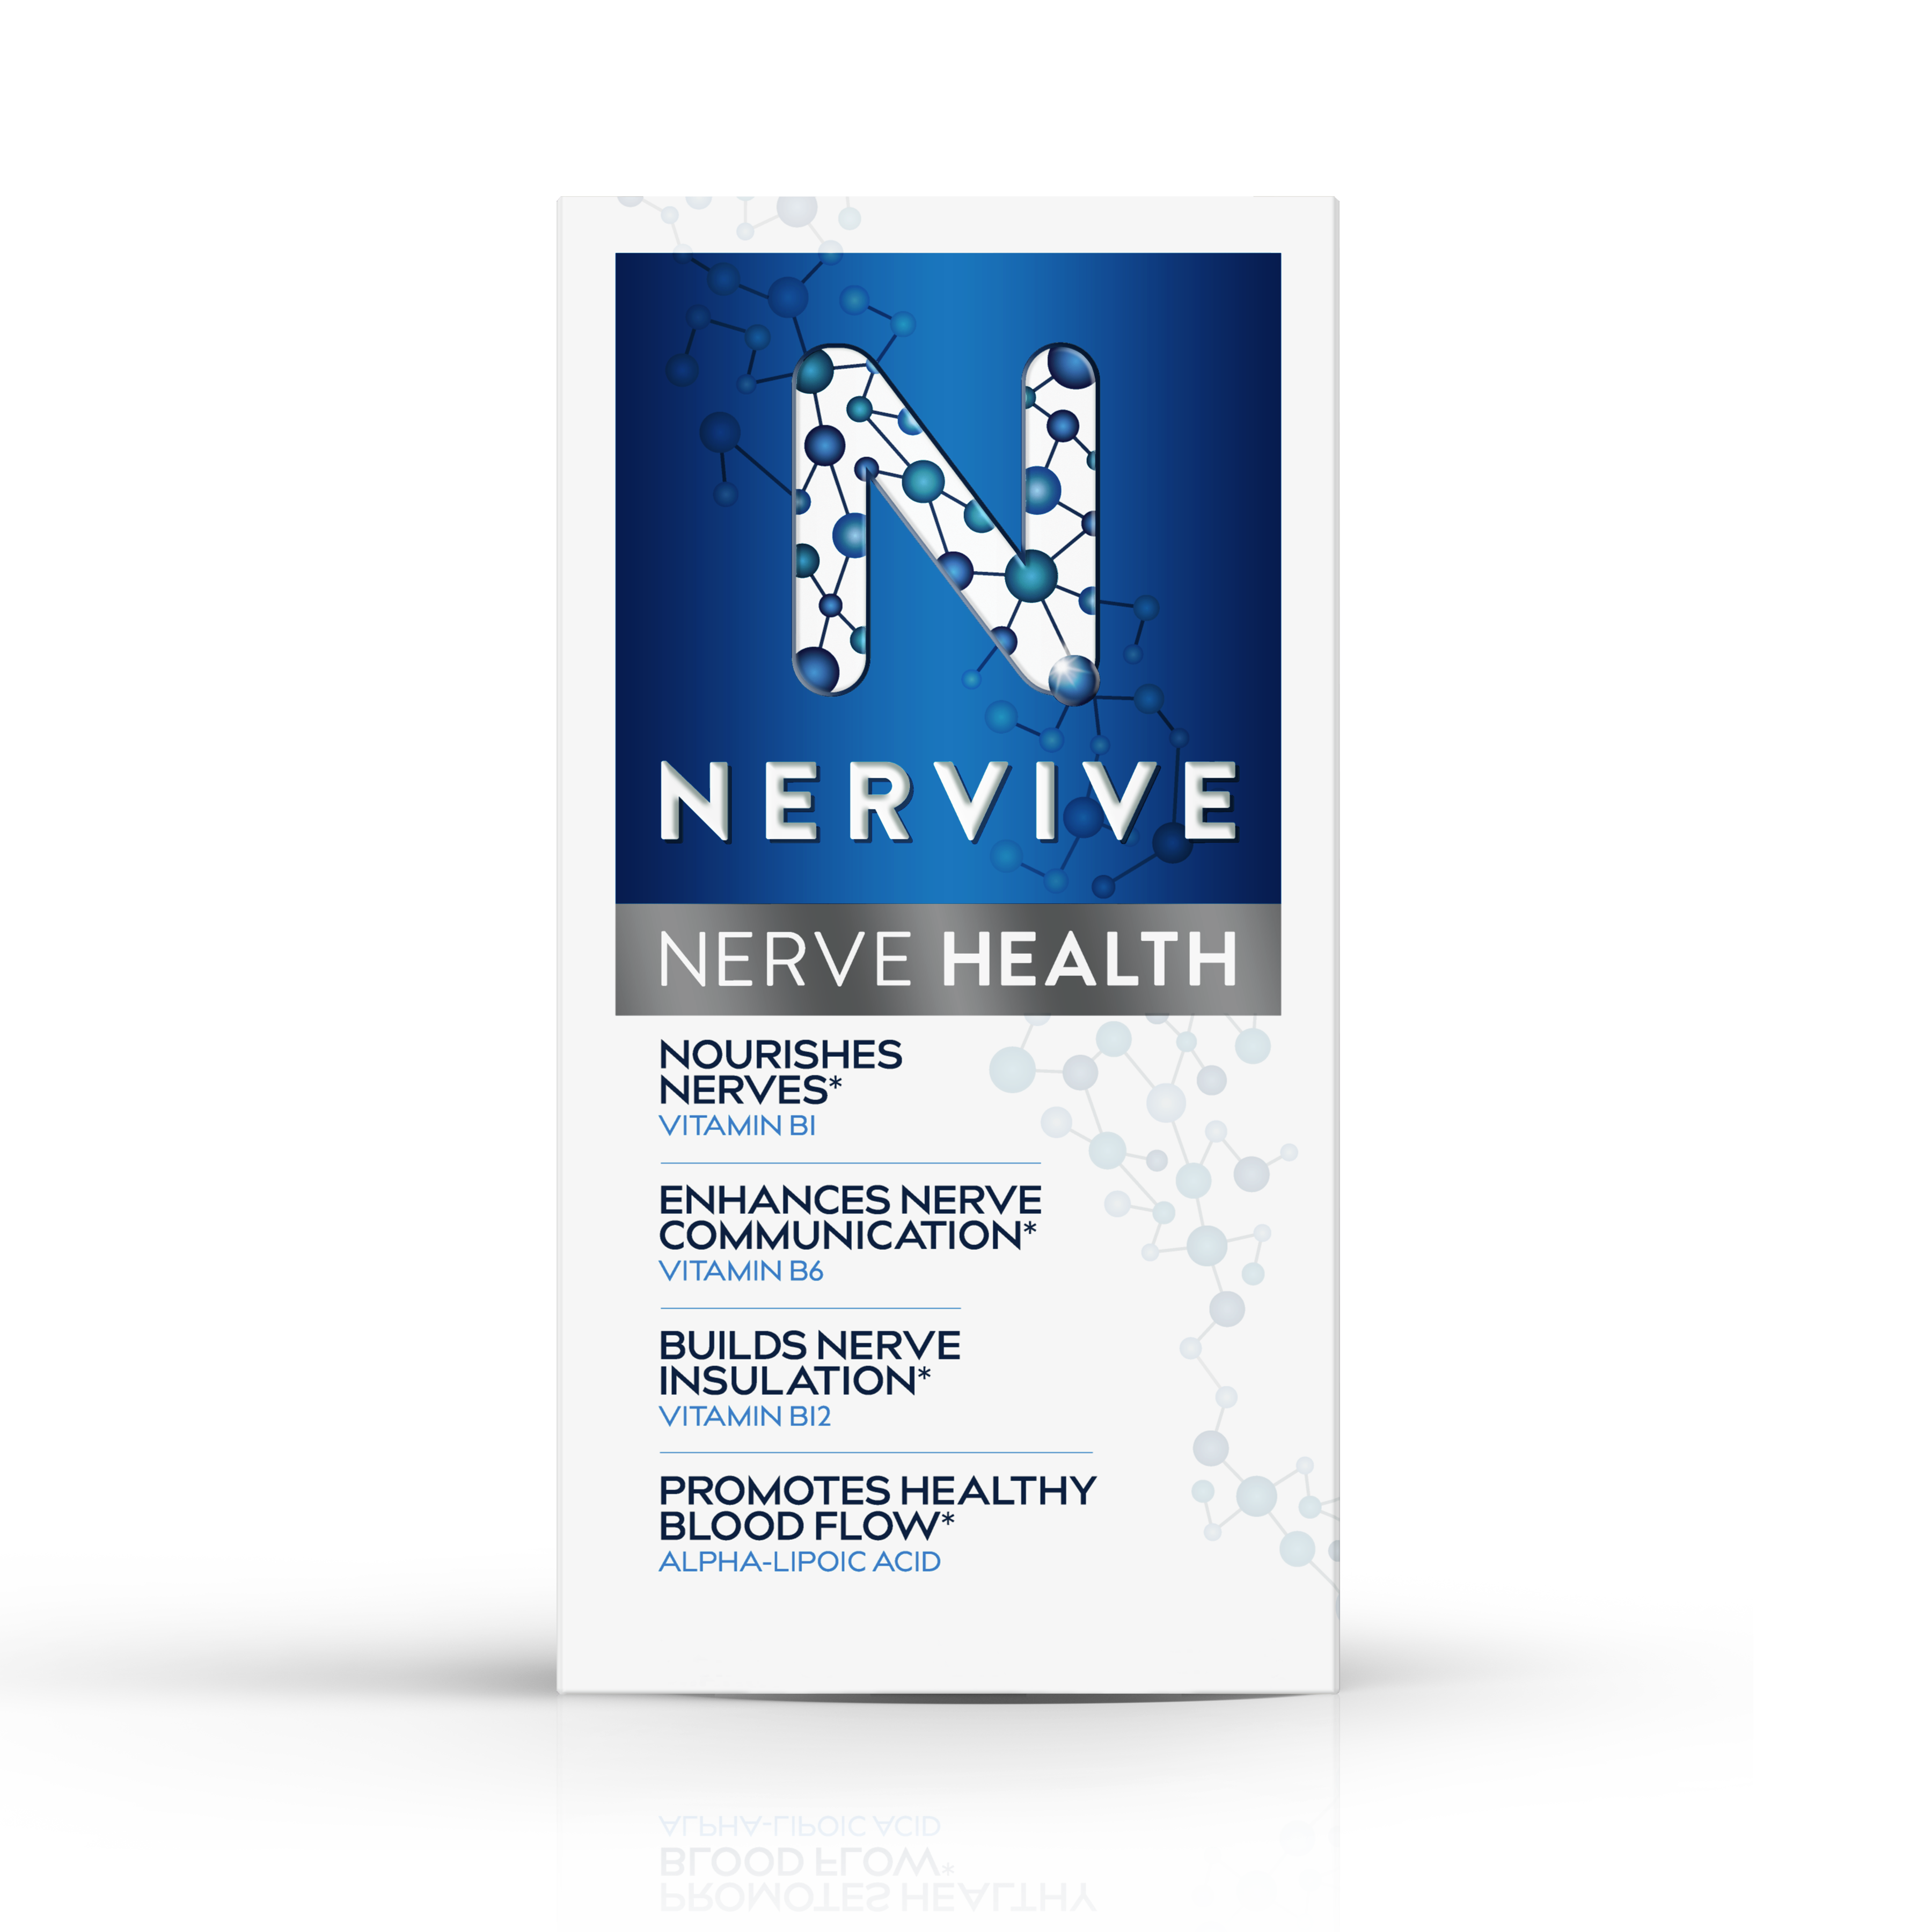 Nervive Nerve Health